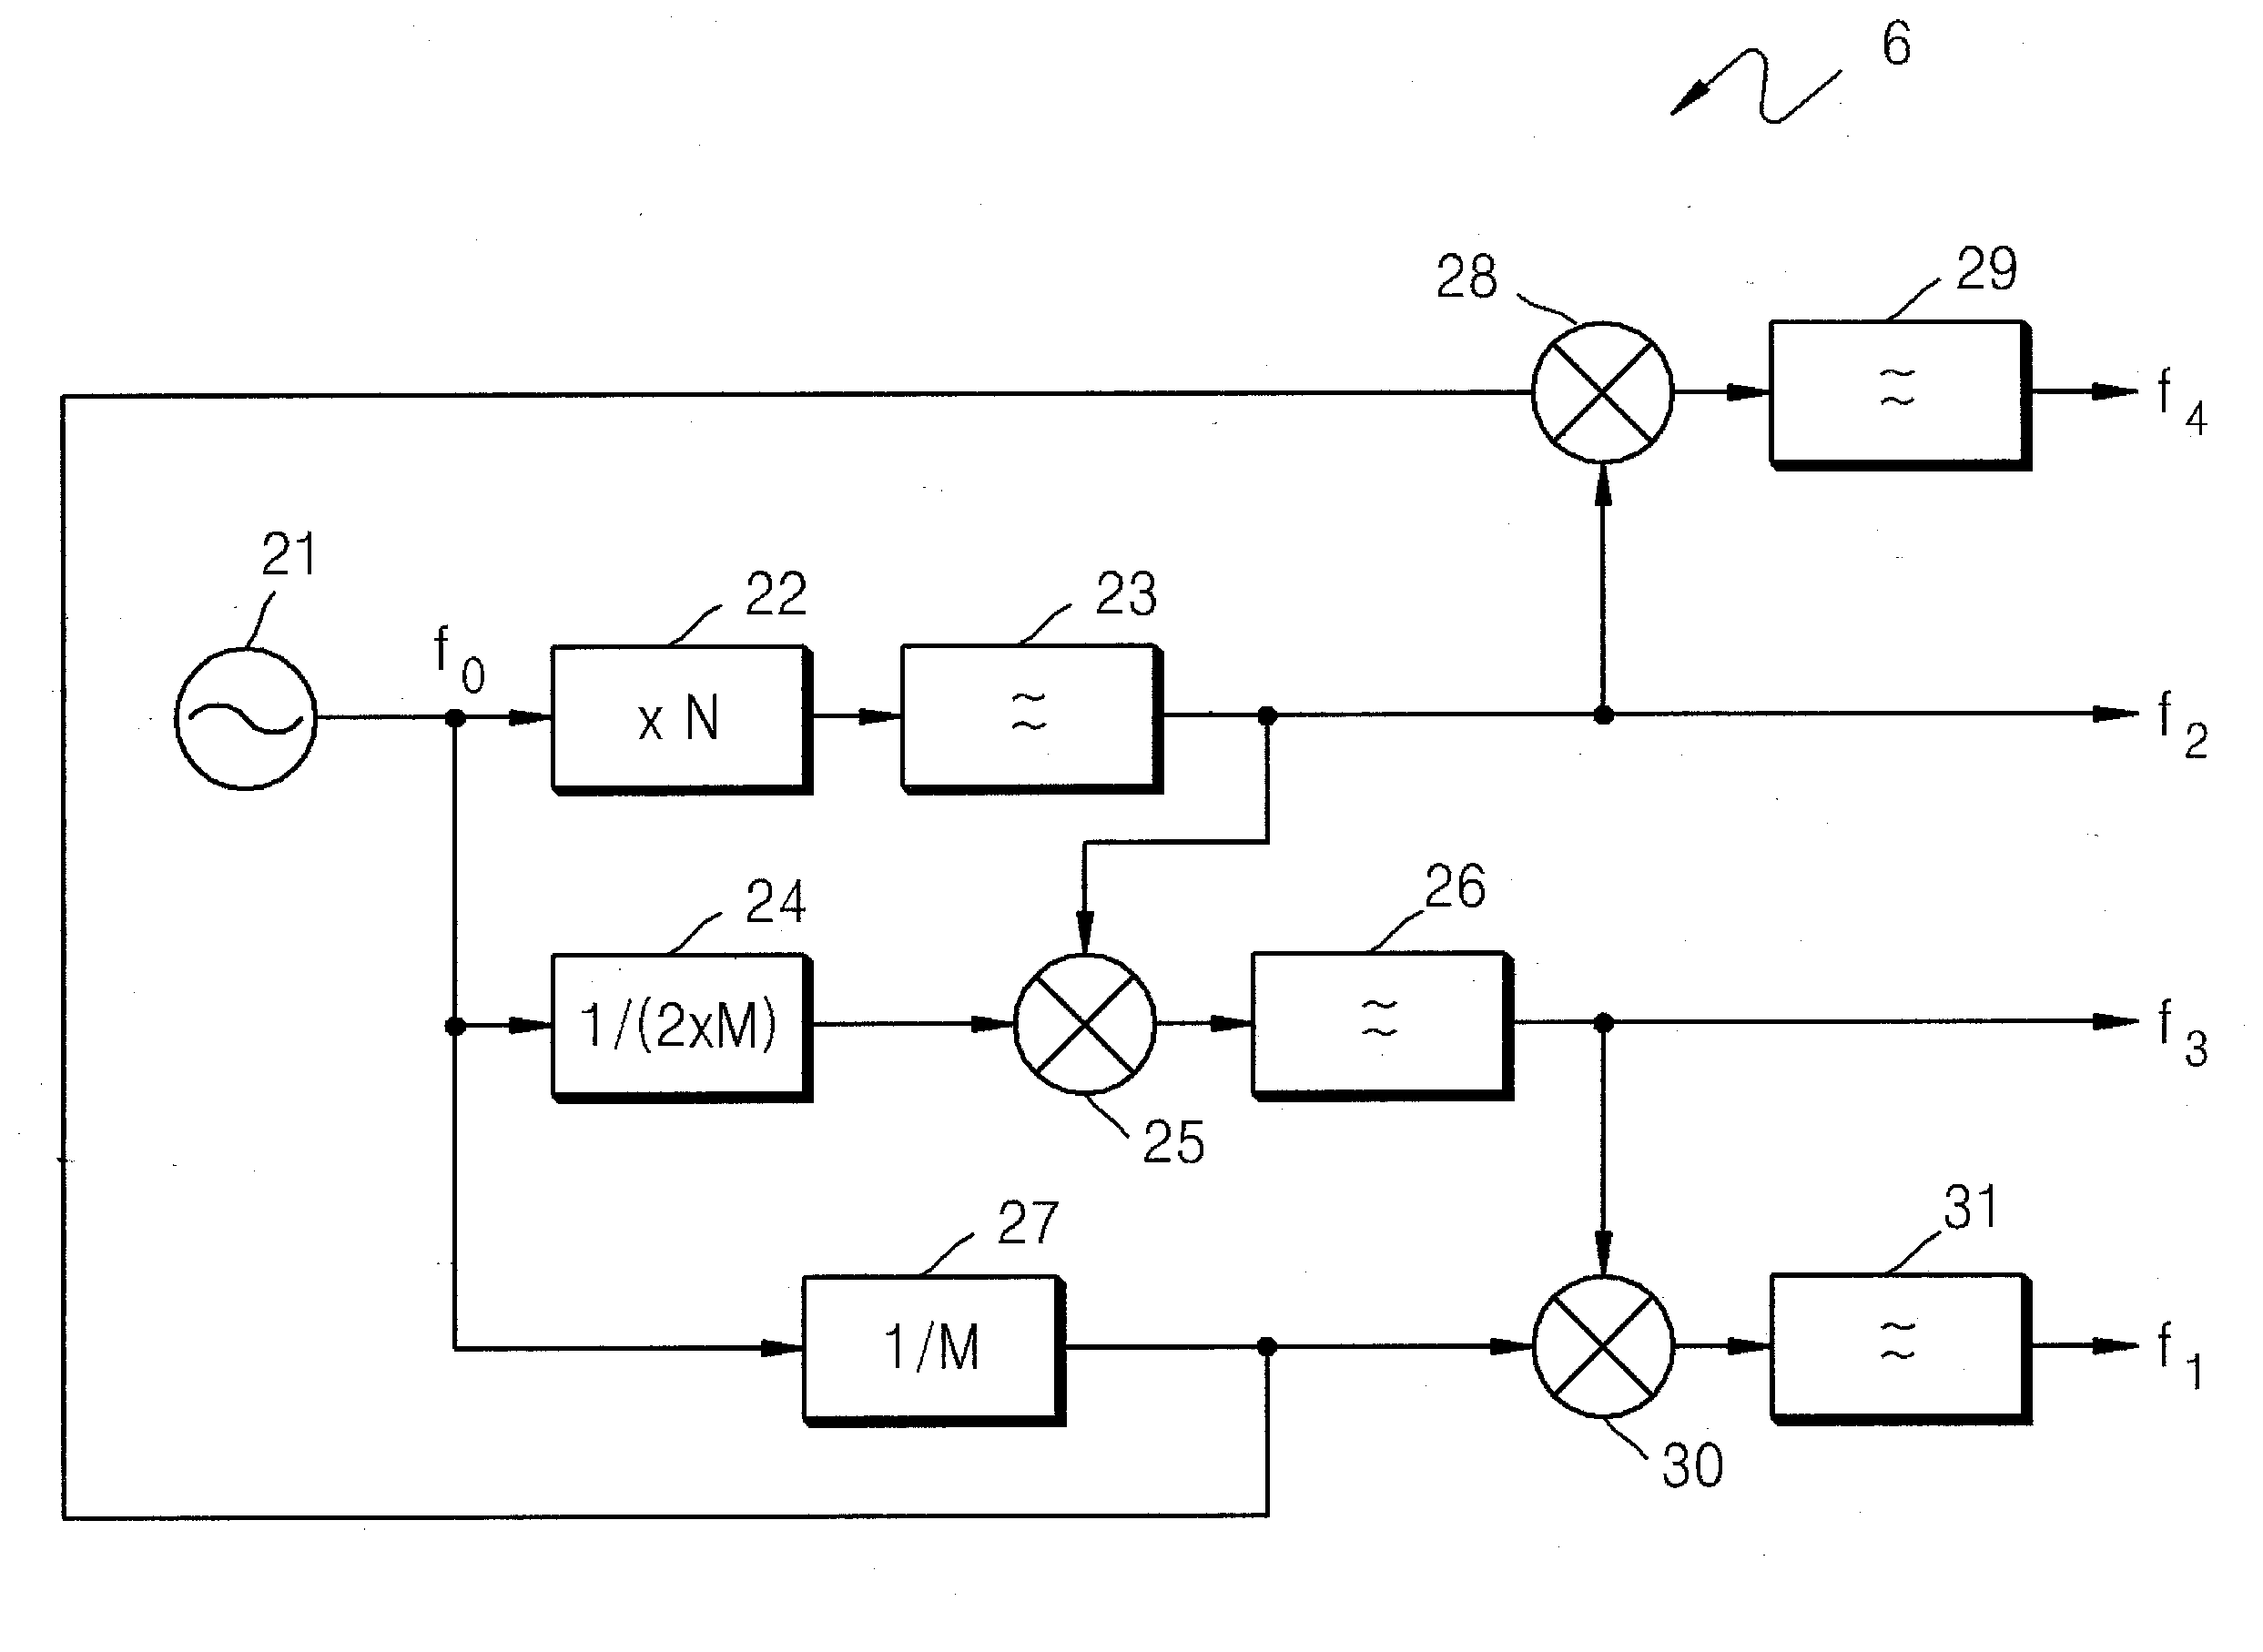 Multi-output oscillator using single oscillator and method of generating multiple outputs using the same